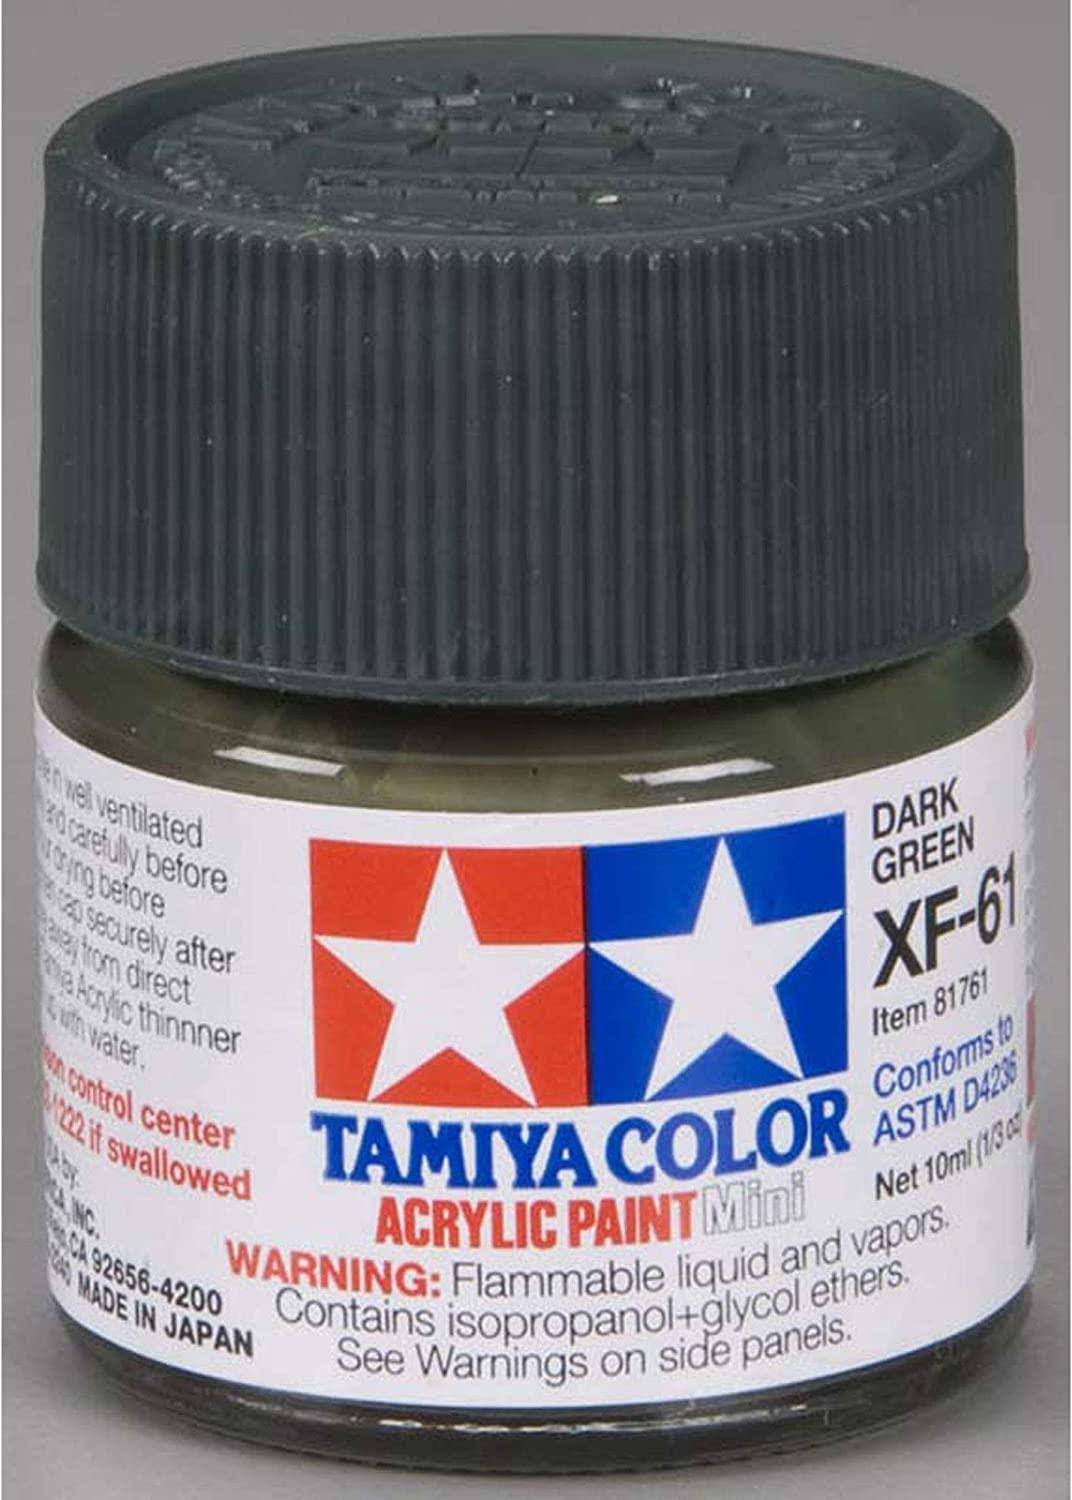 Tamiya - Acrylic Mini XF-61 Dark Green